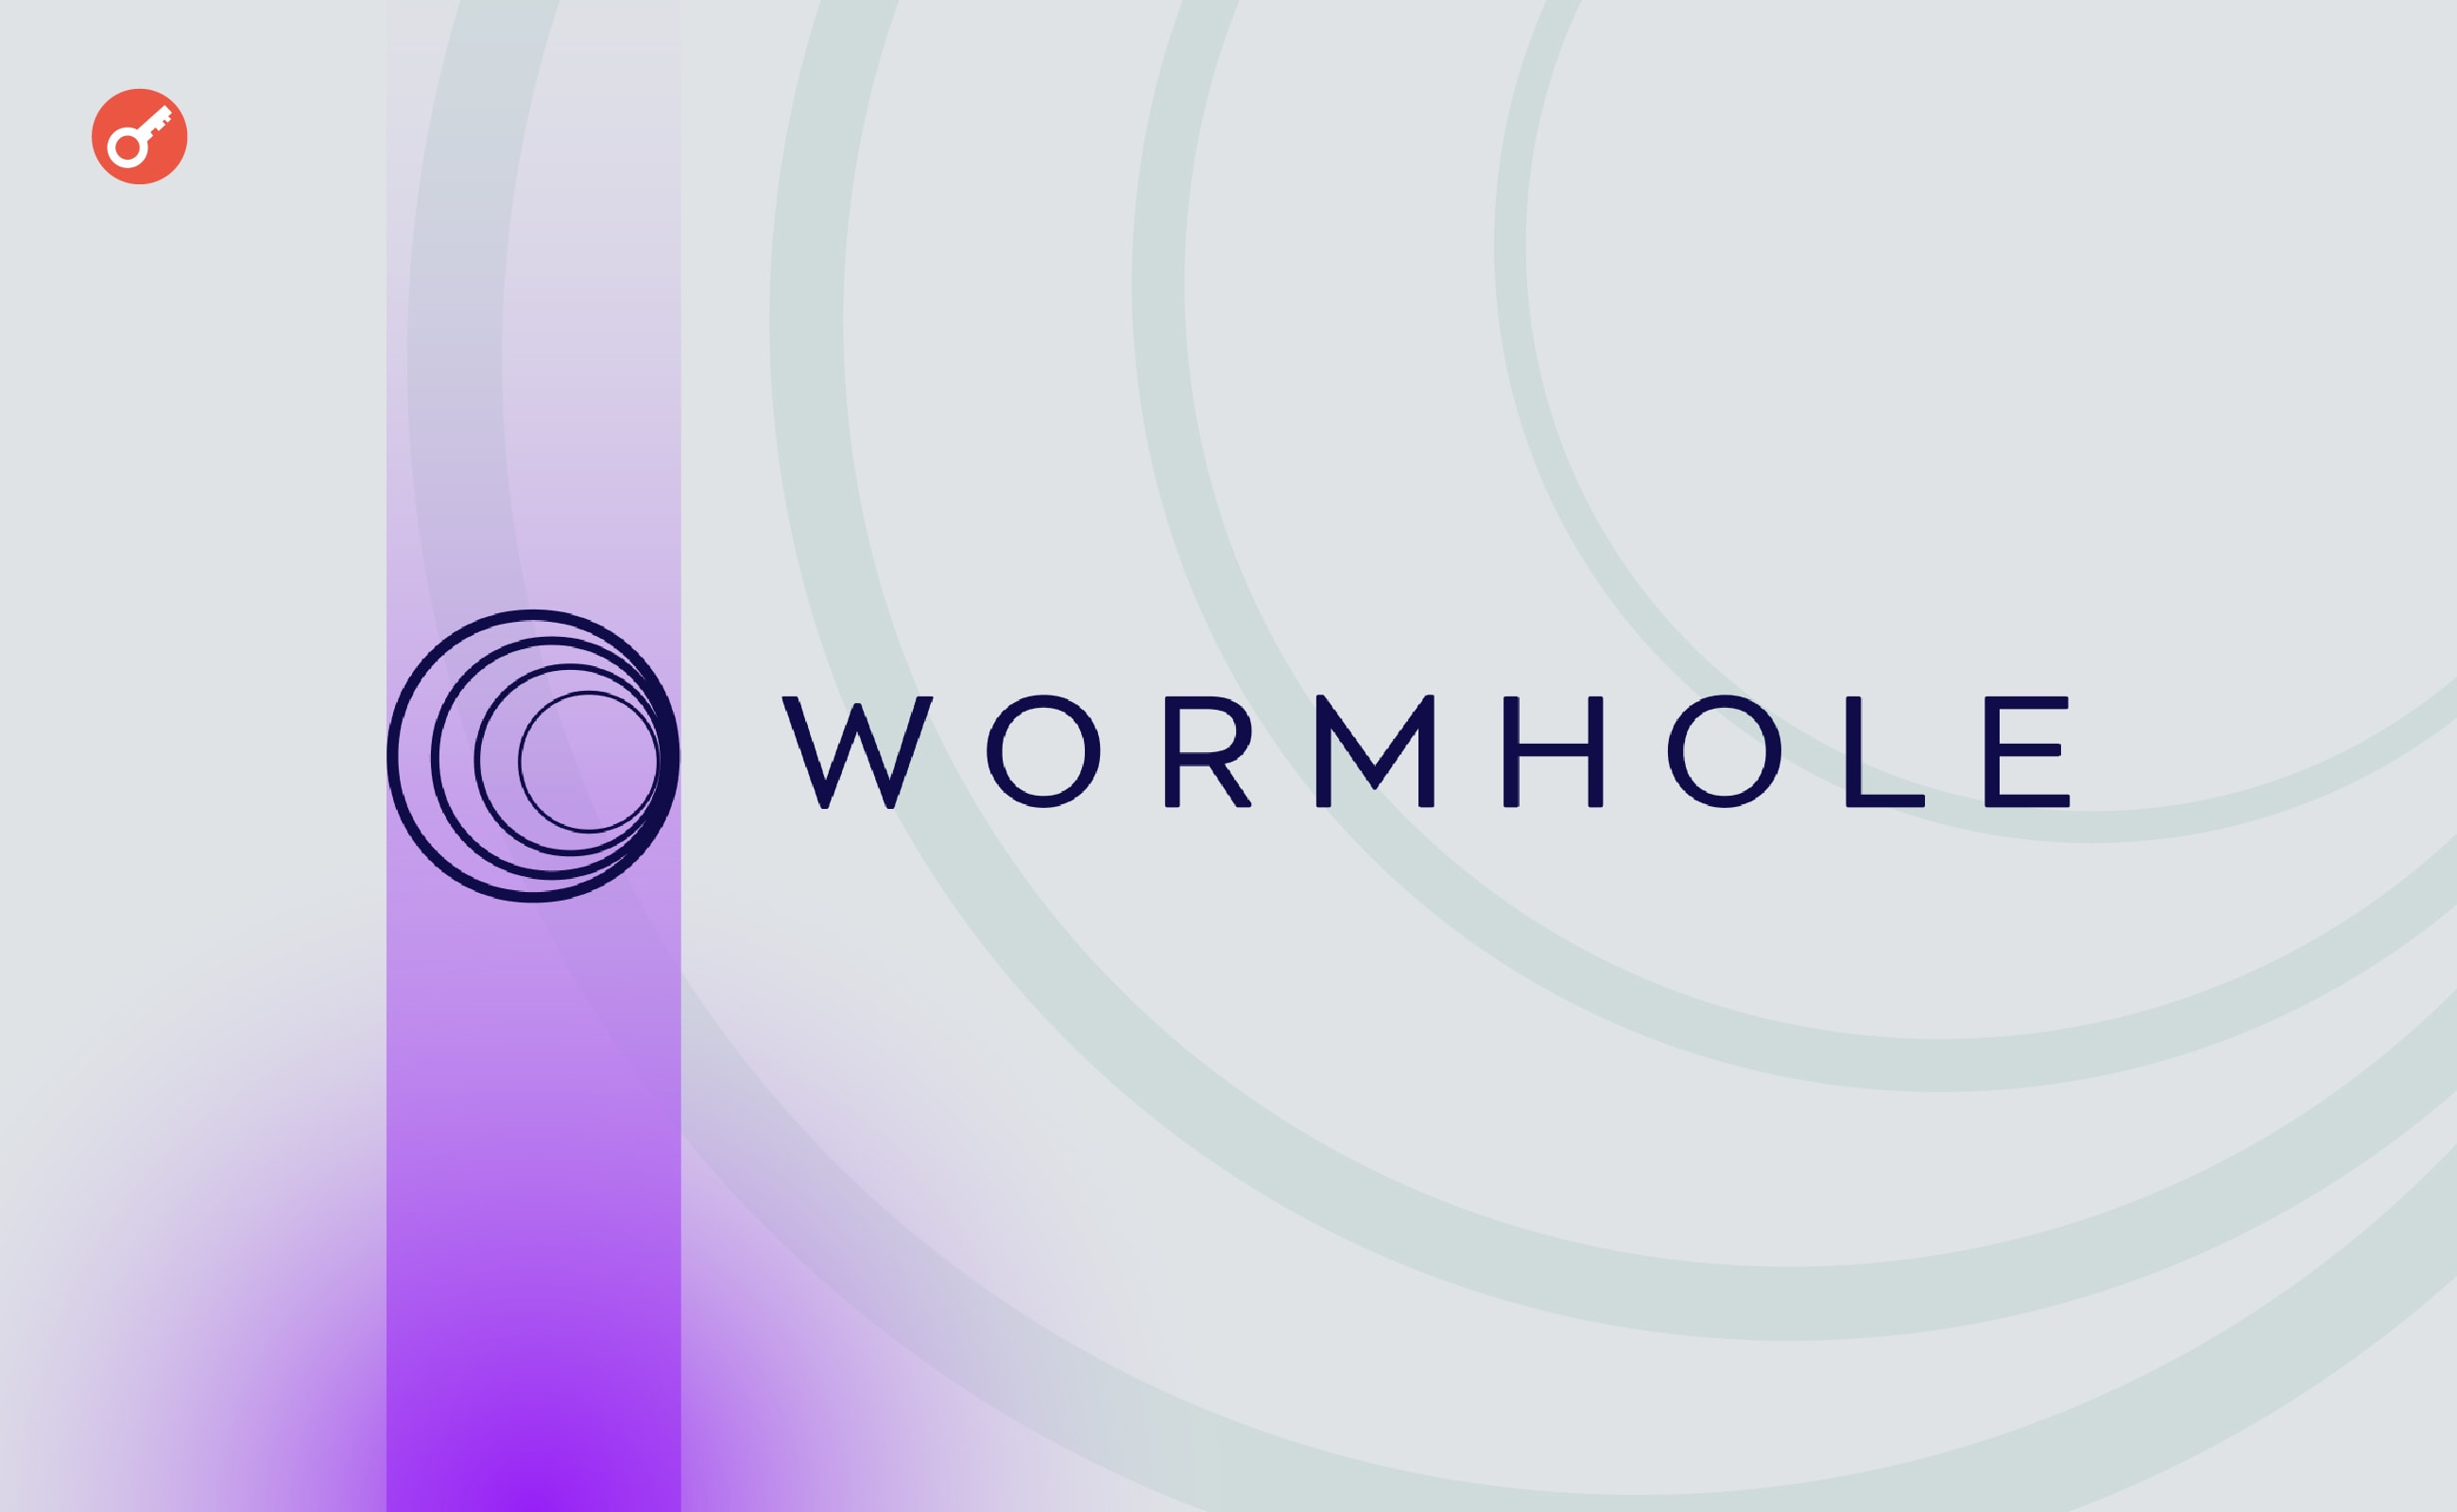 Команда Wormhole объявила о раздаче 617 млн токенов участникам аирдропа. Заглавный коллаж новости.